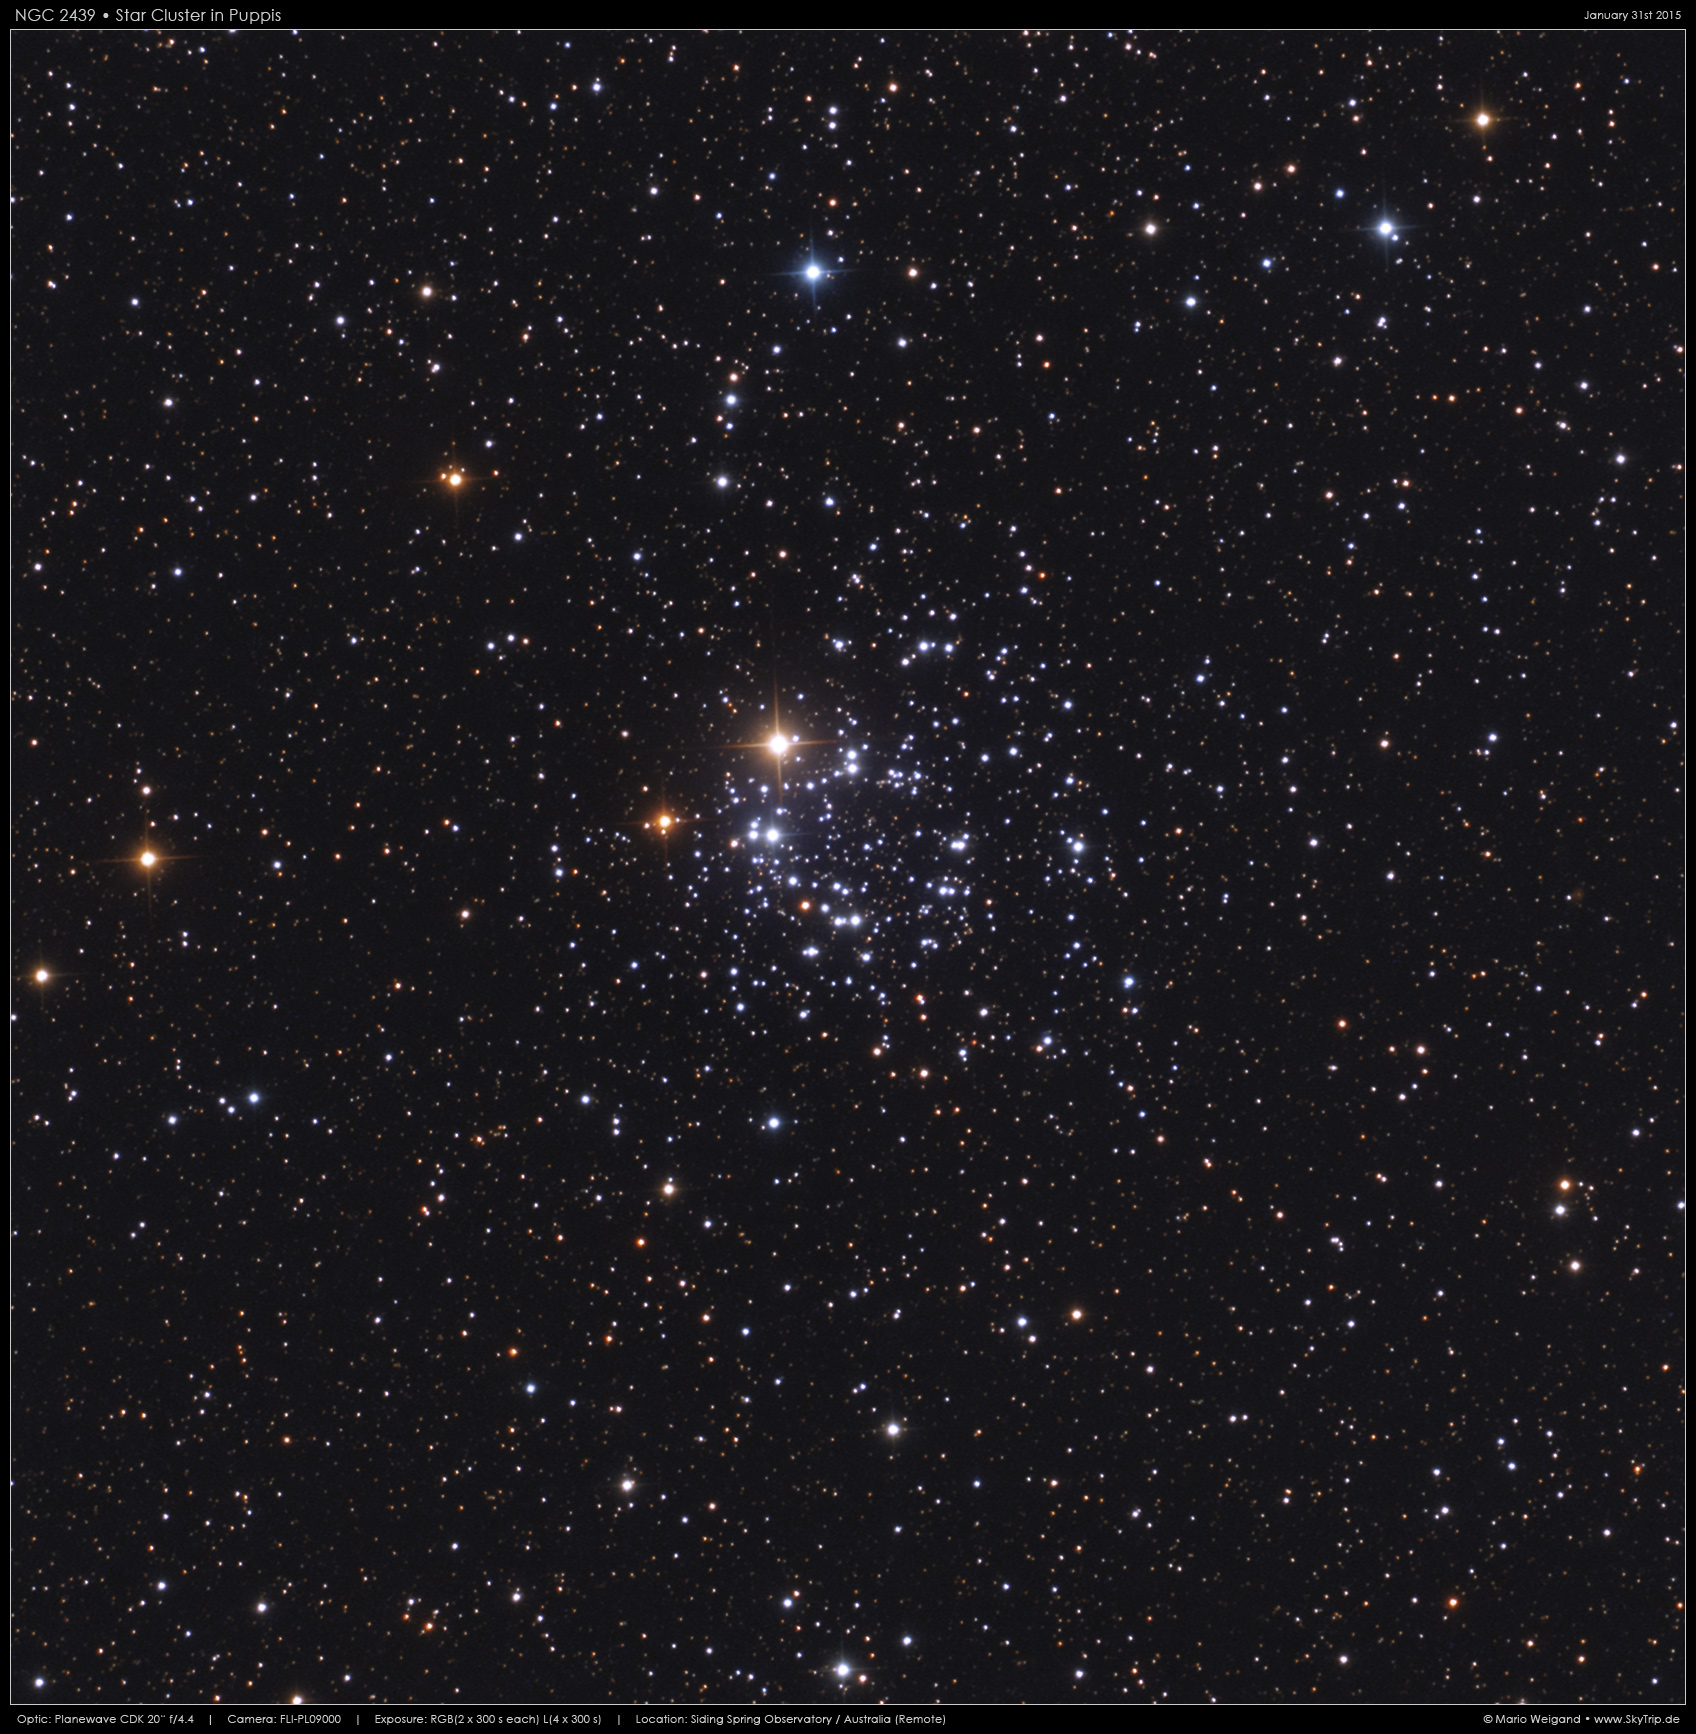 NGC 2439 in Puppis